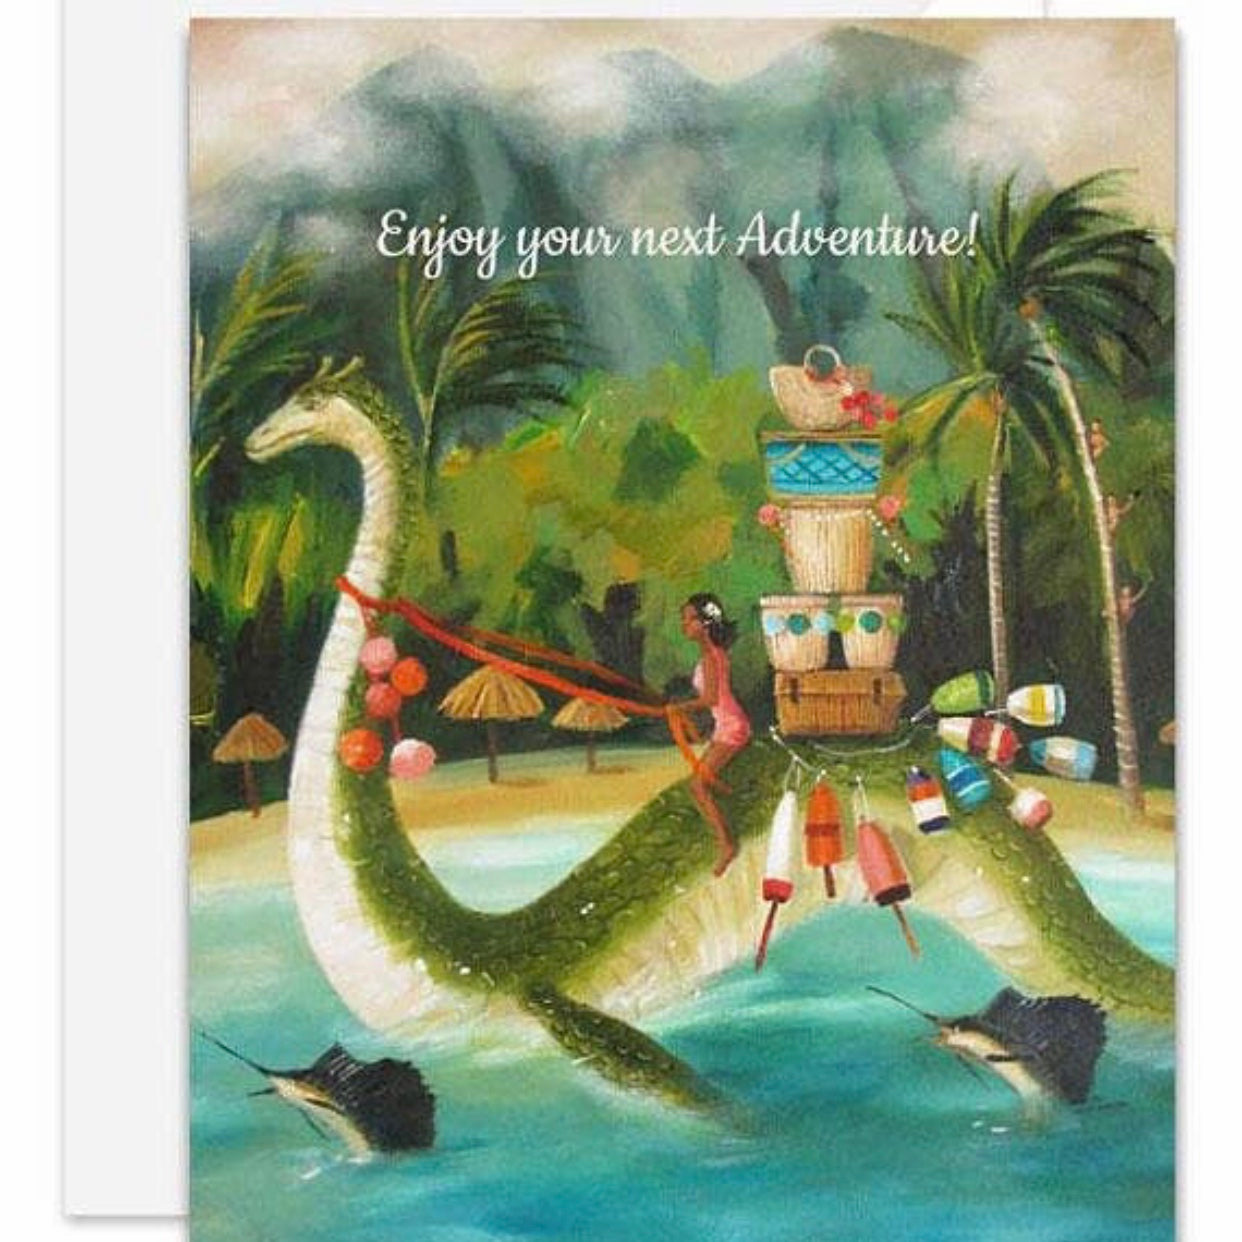 enjoy your next adventure greeting card